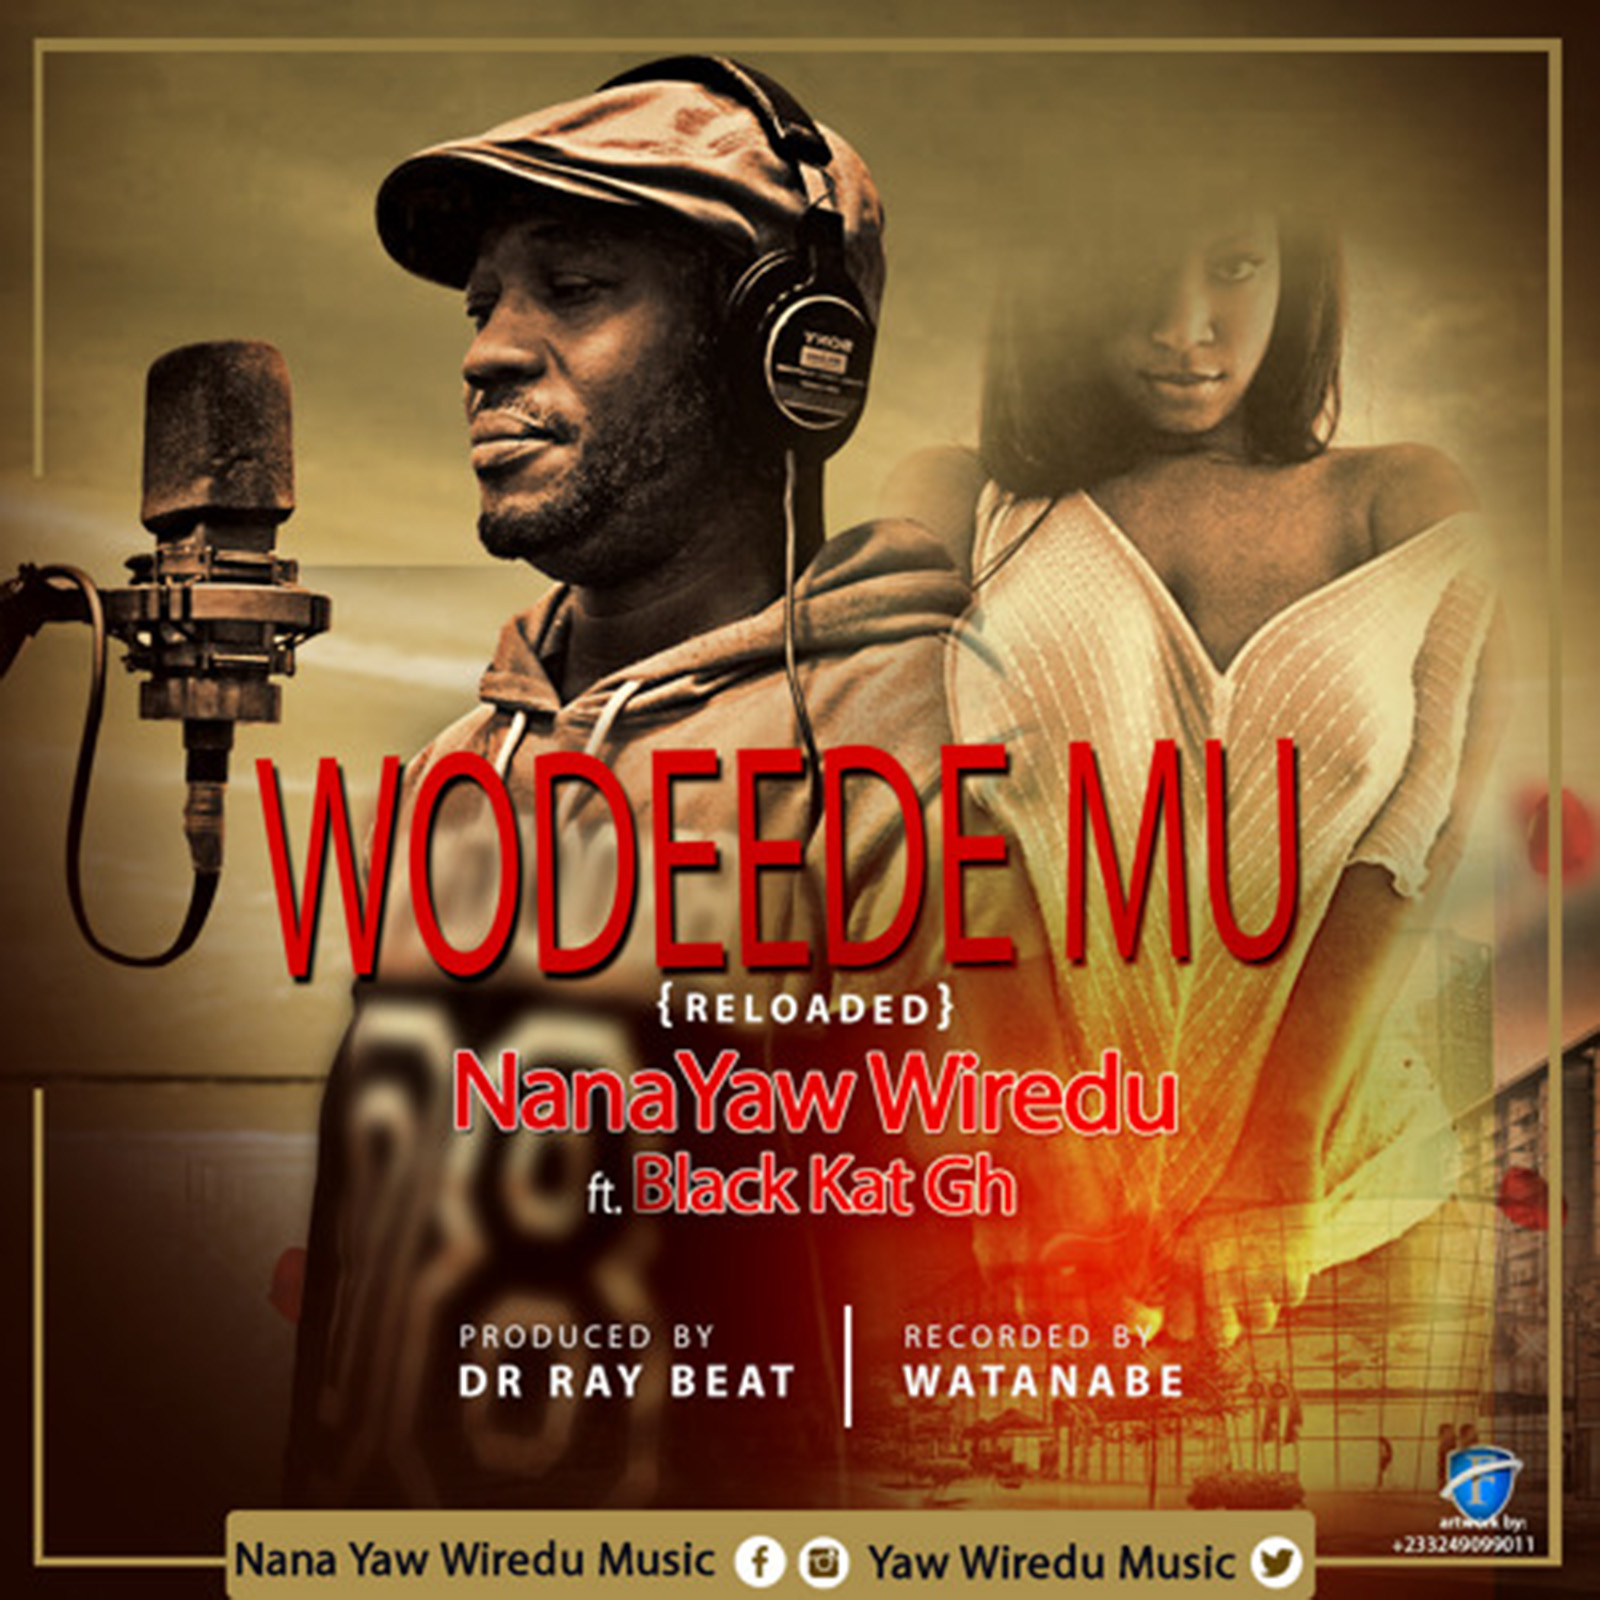 Wodeede Mu (Reloaded) by Nana Yaw Wiredu feat. Black Kat